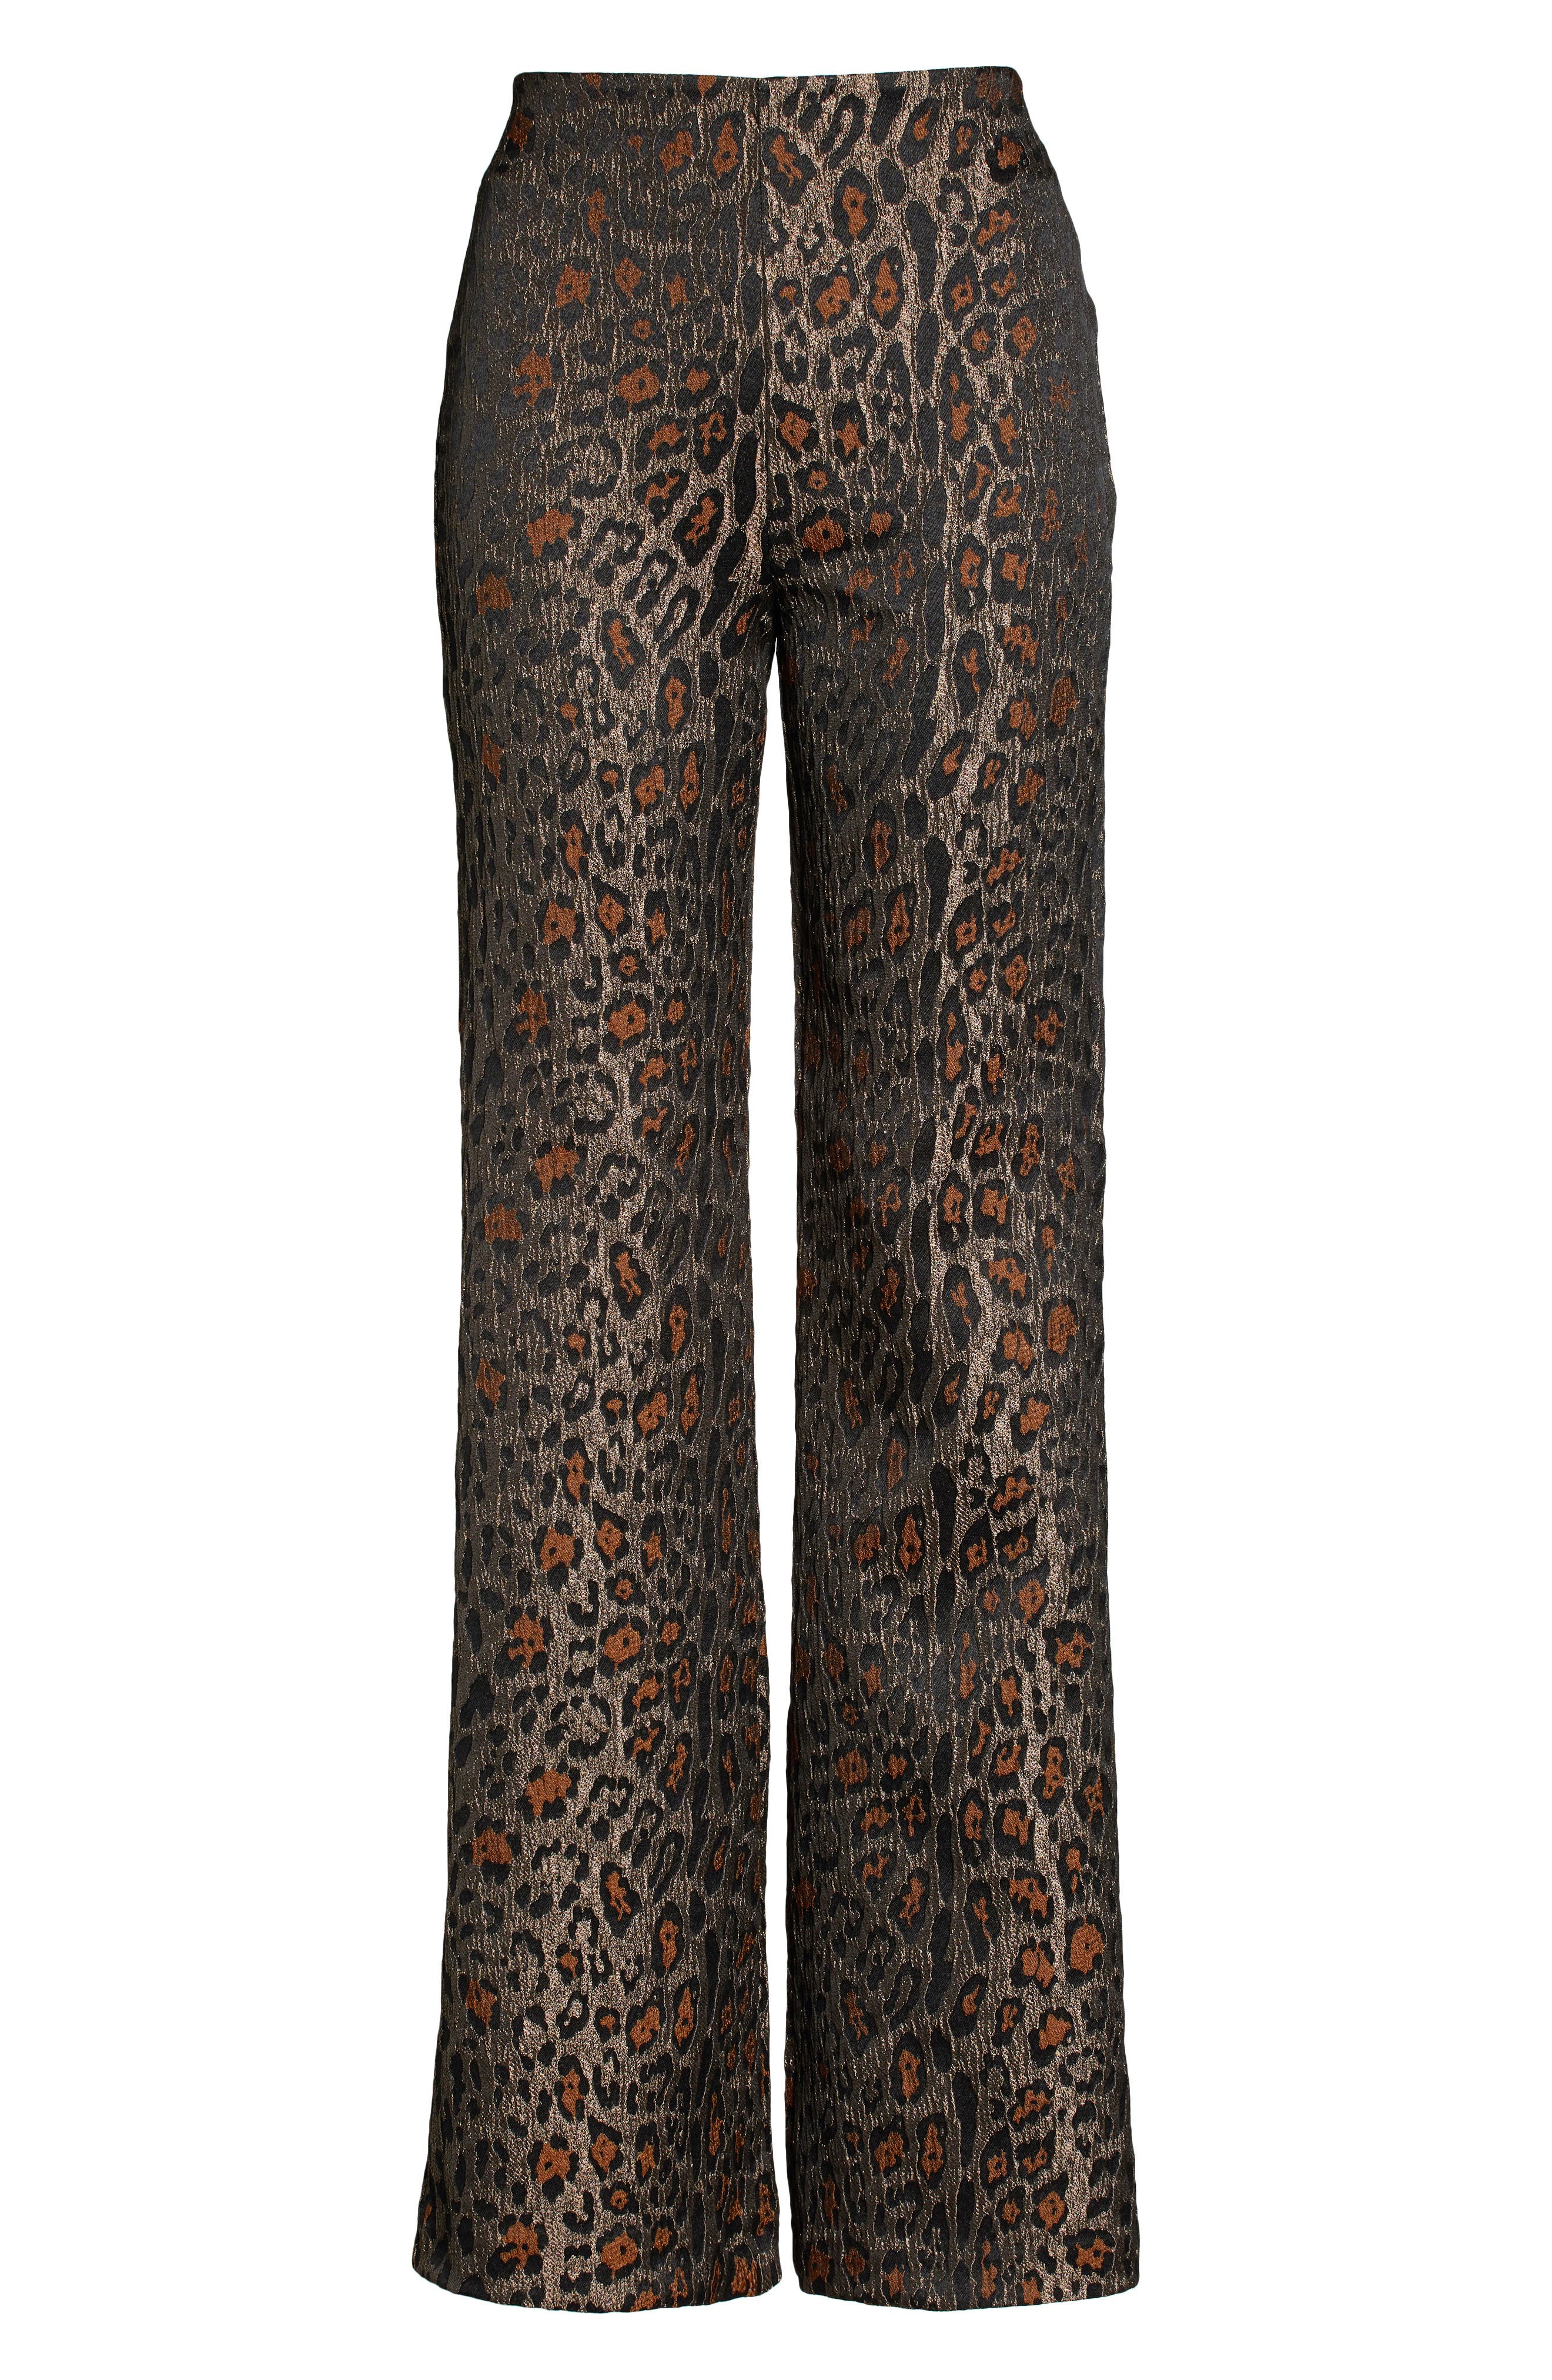 Ksubi 3:00 A.M. Leopard Print Pants in Assorted at Nordstrom, Size 24